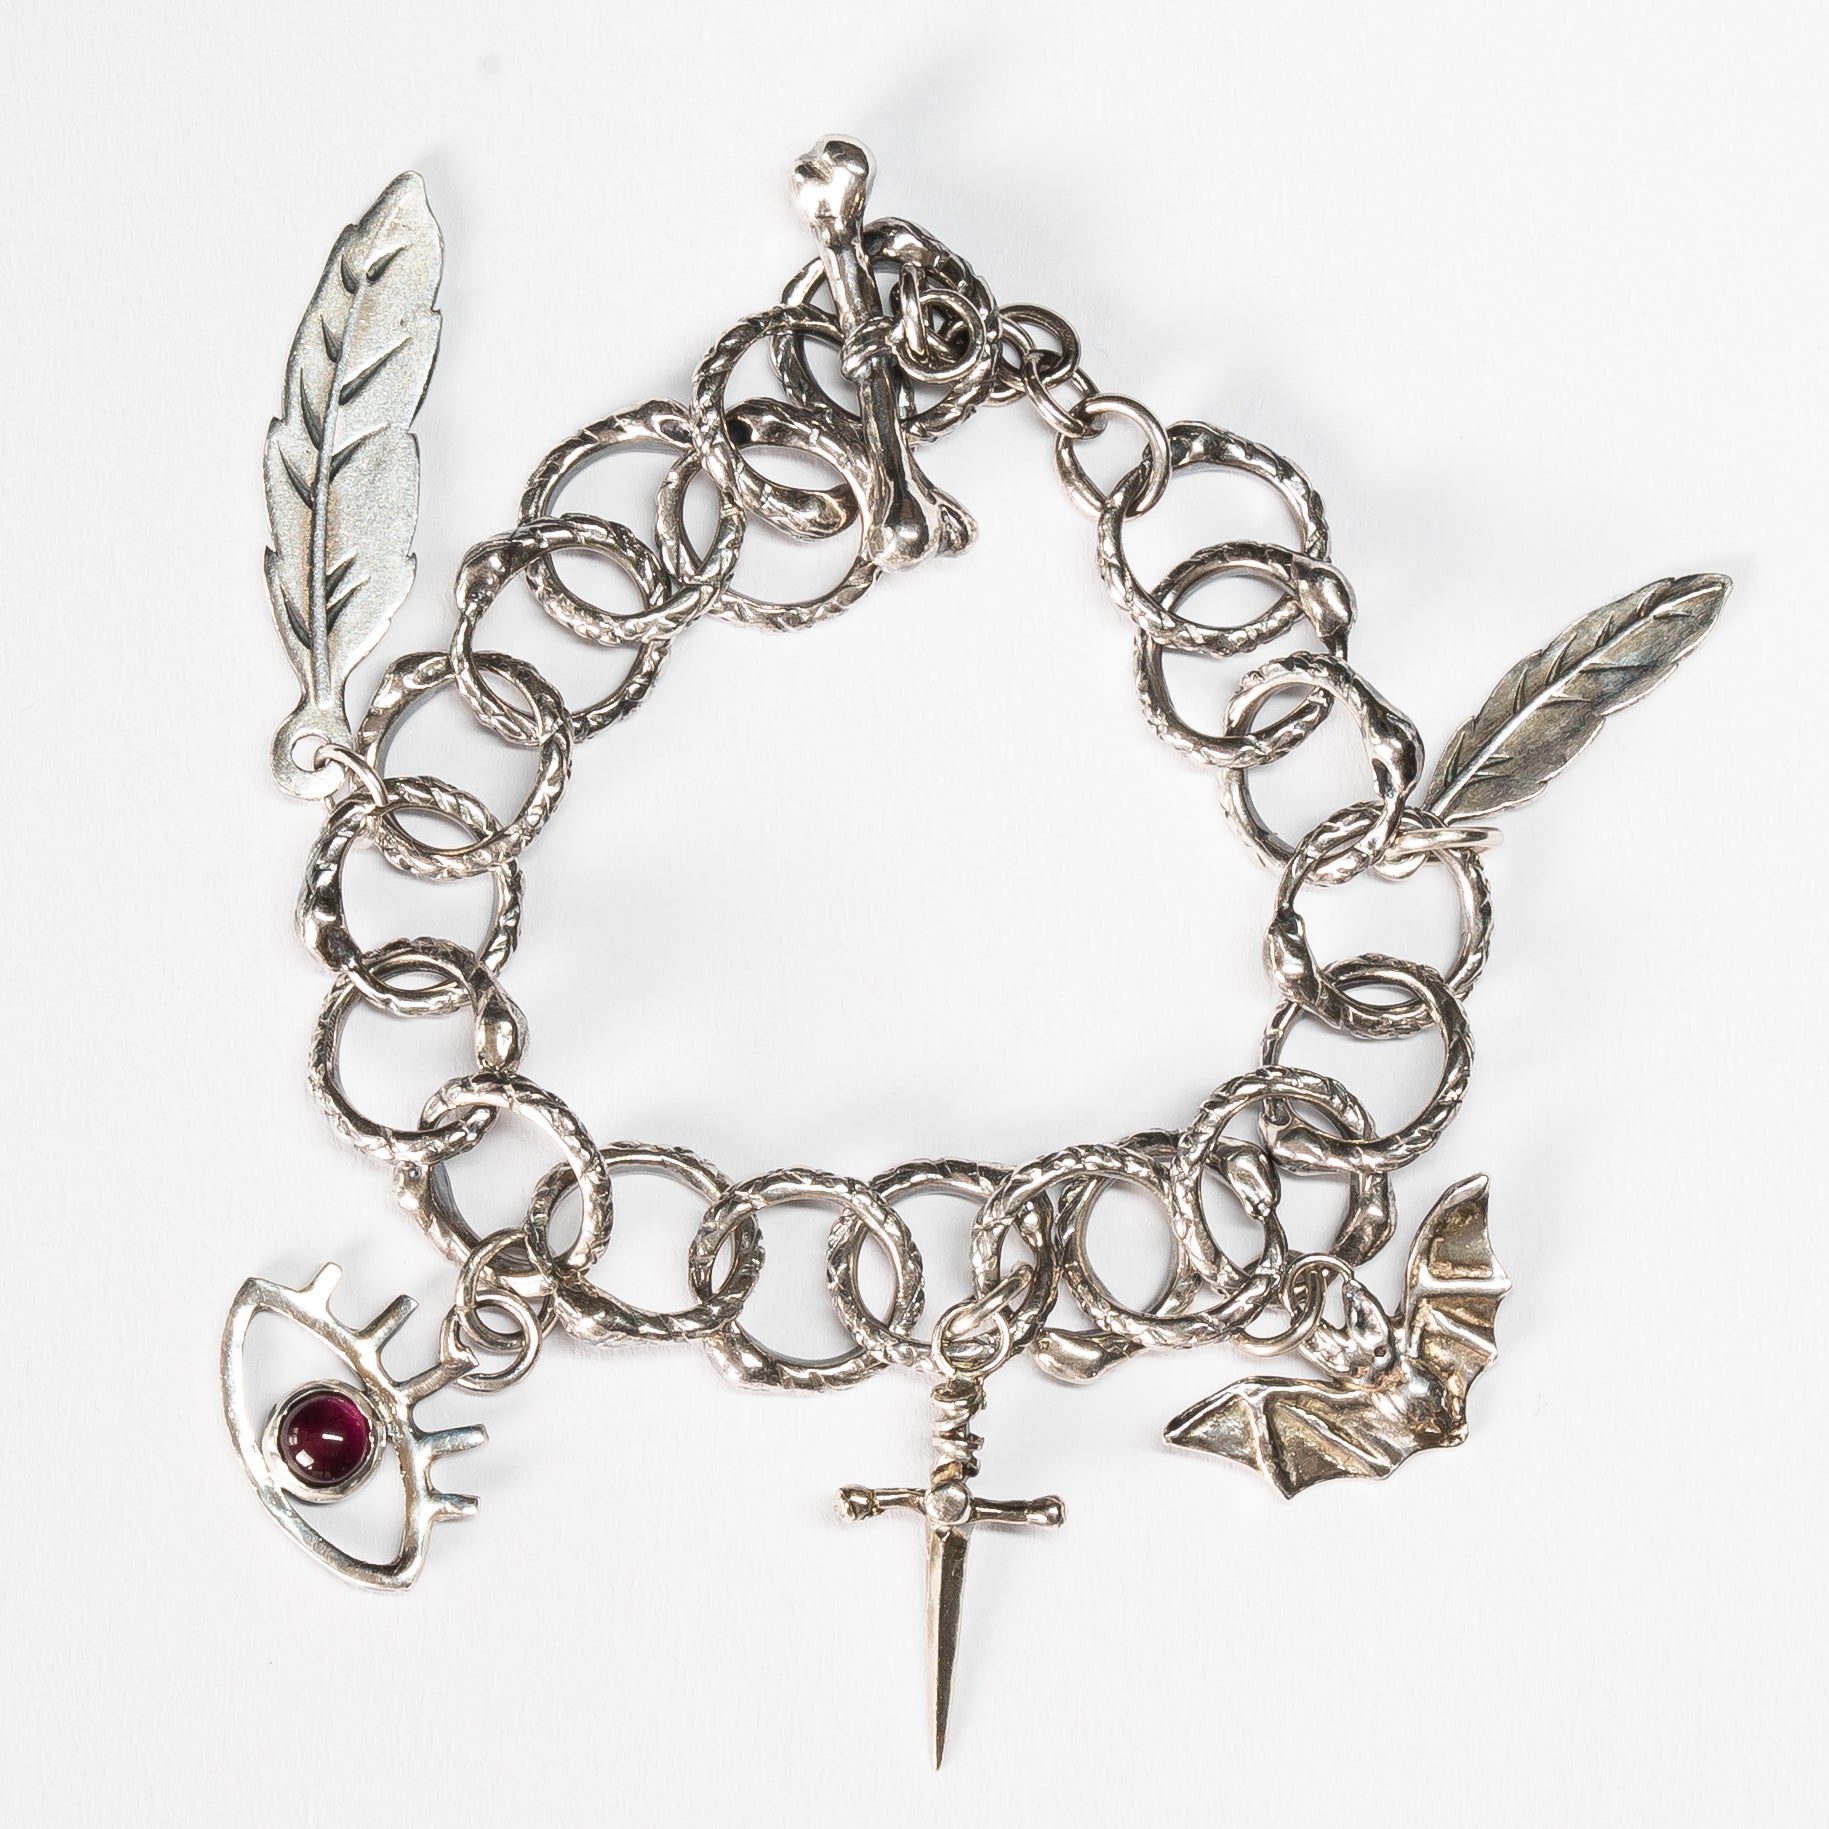 alternative gothic style sterling silver charm bracelet on a white background